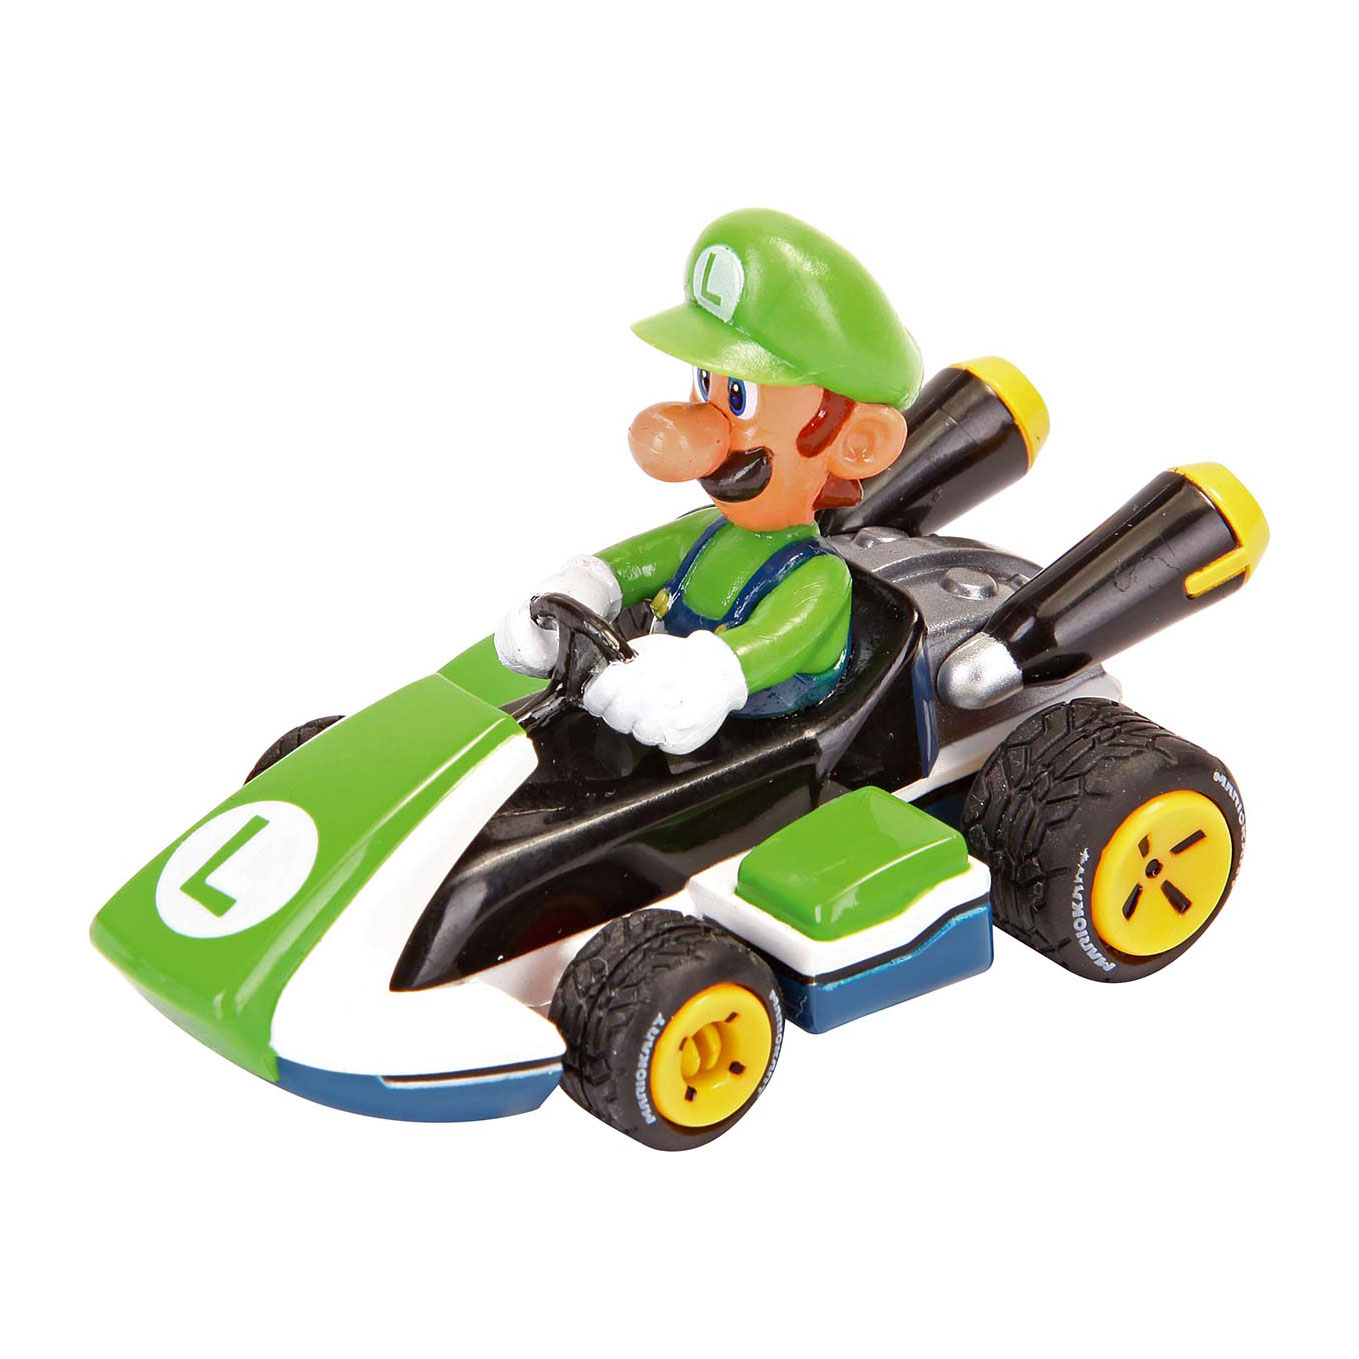 Super Mario Pull back Kart Set, 3 pcs.